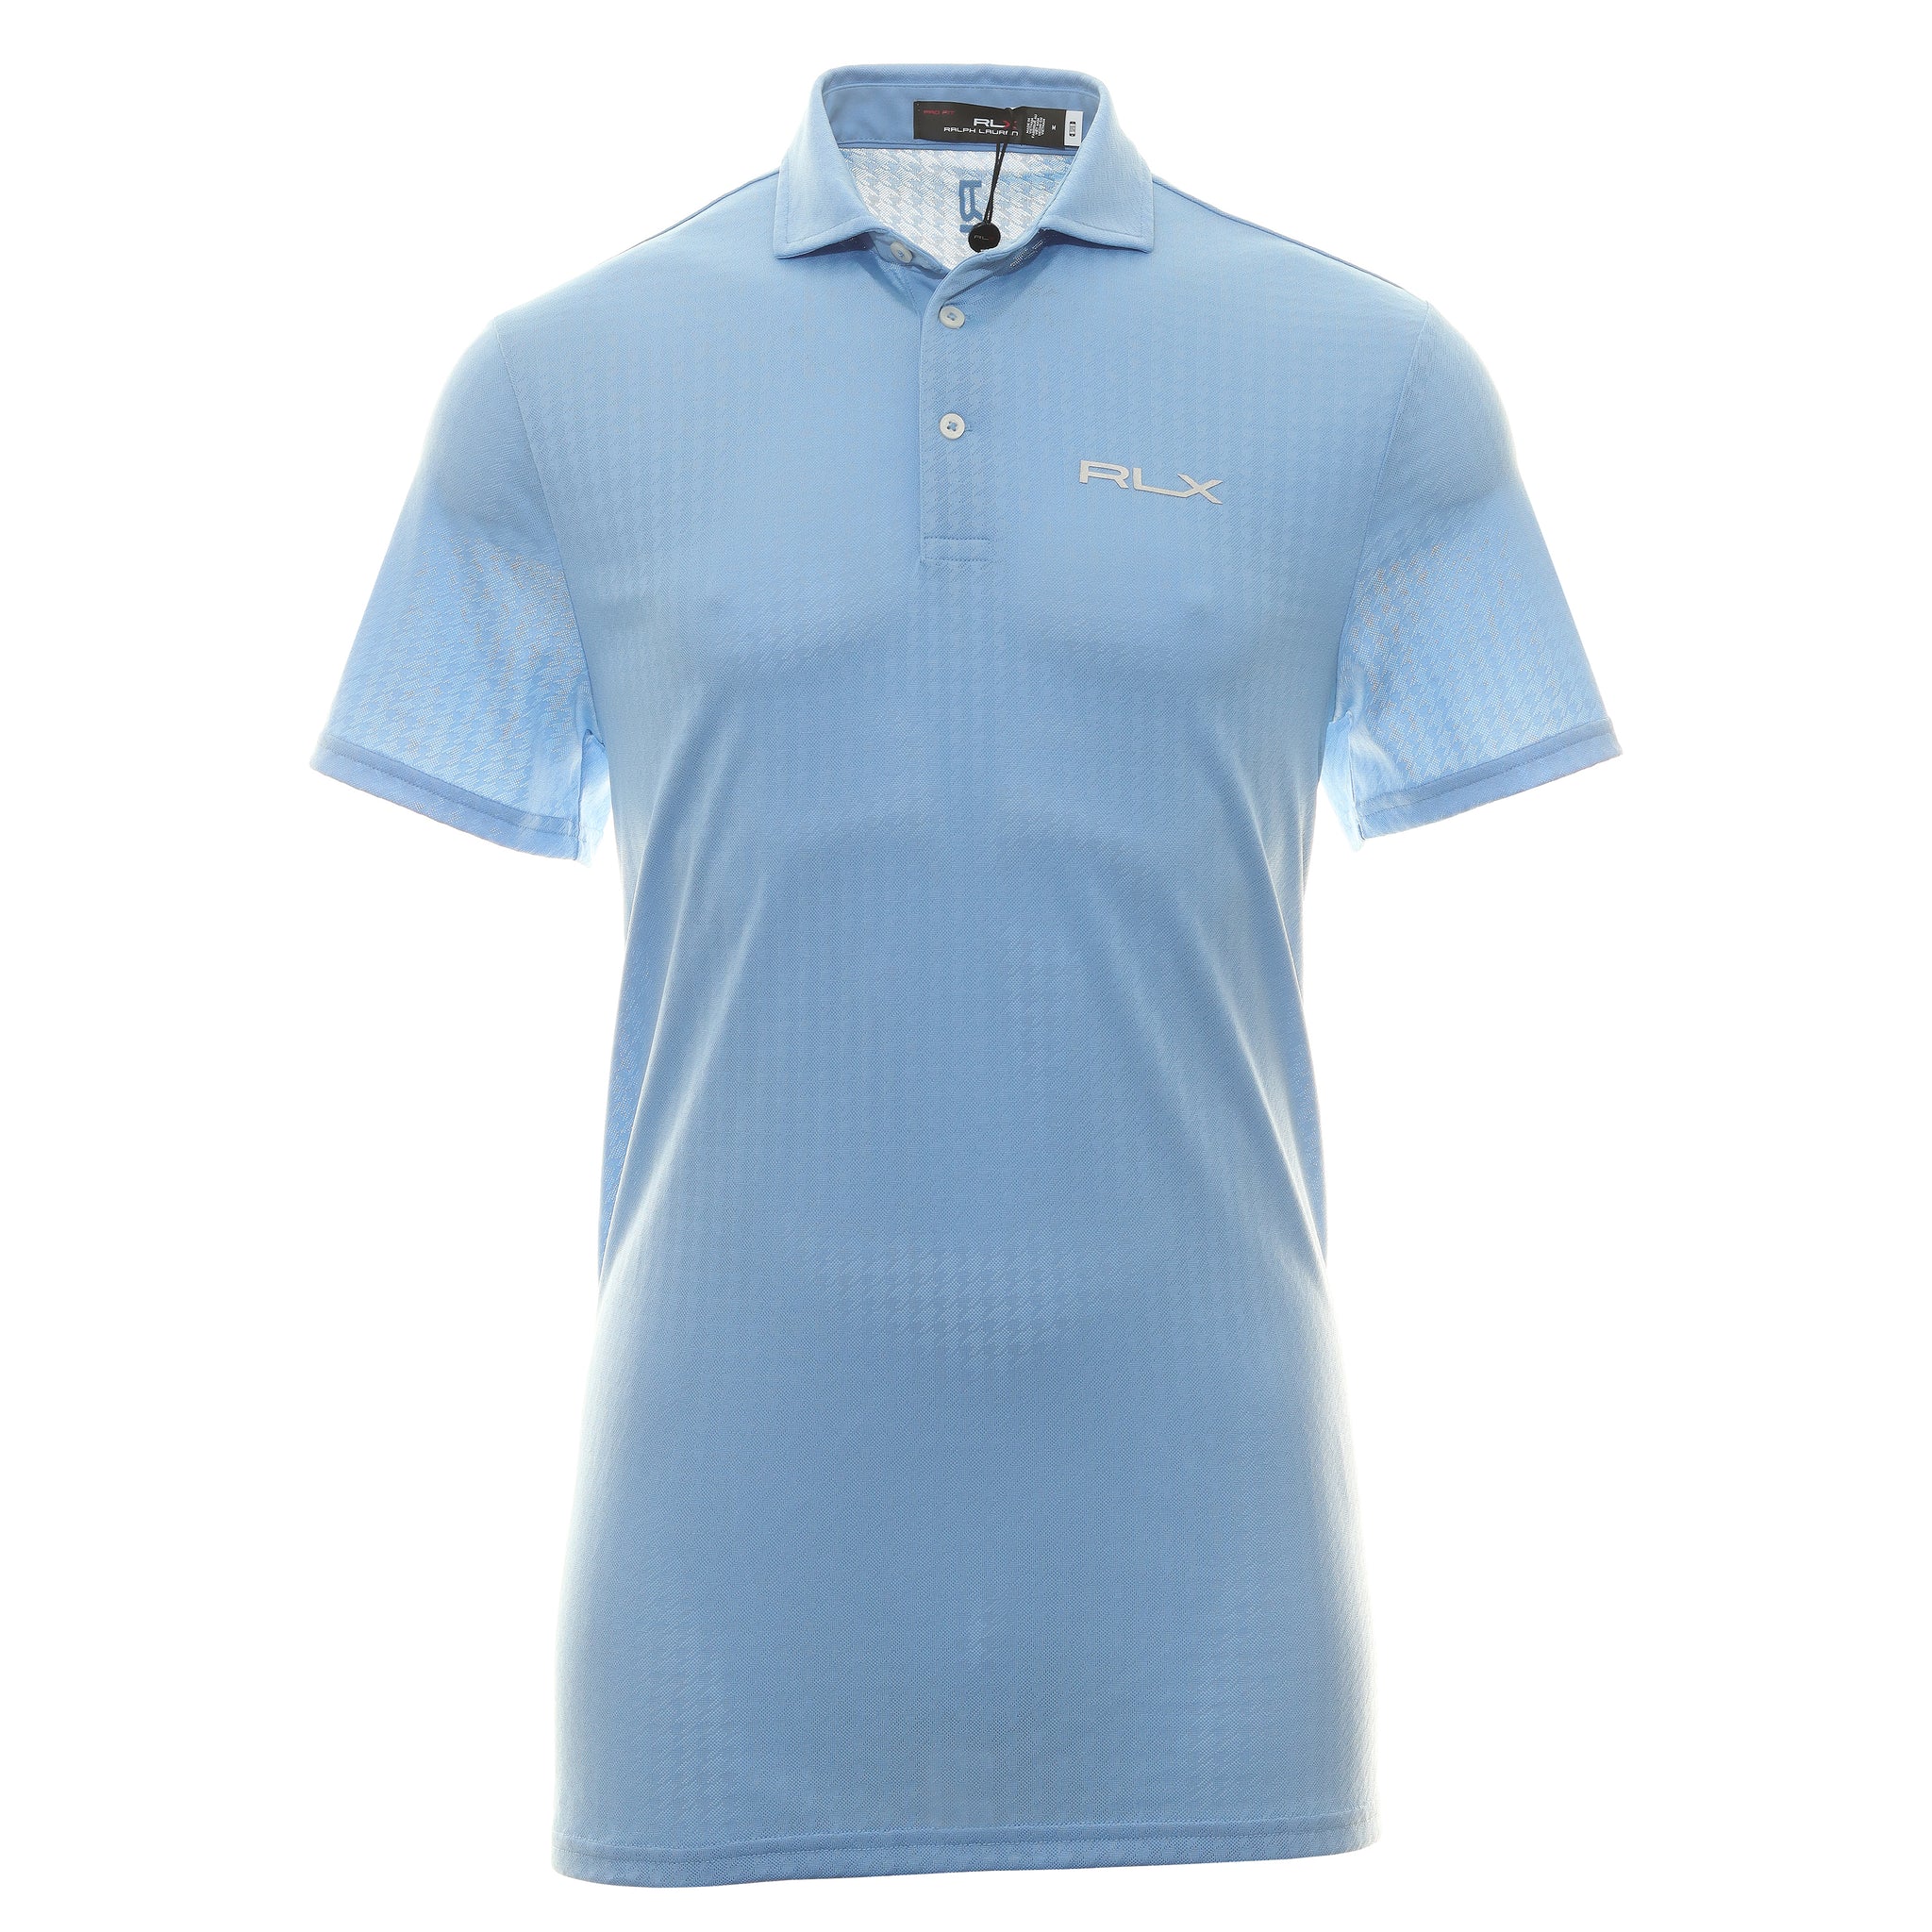 rlx-ralph-lauren-jacquard-polo-shirt-785918213-blue-lagoon-classic-houndstooth-002